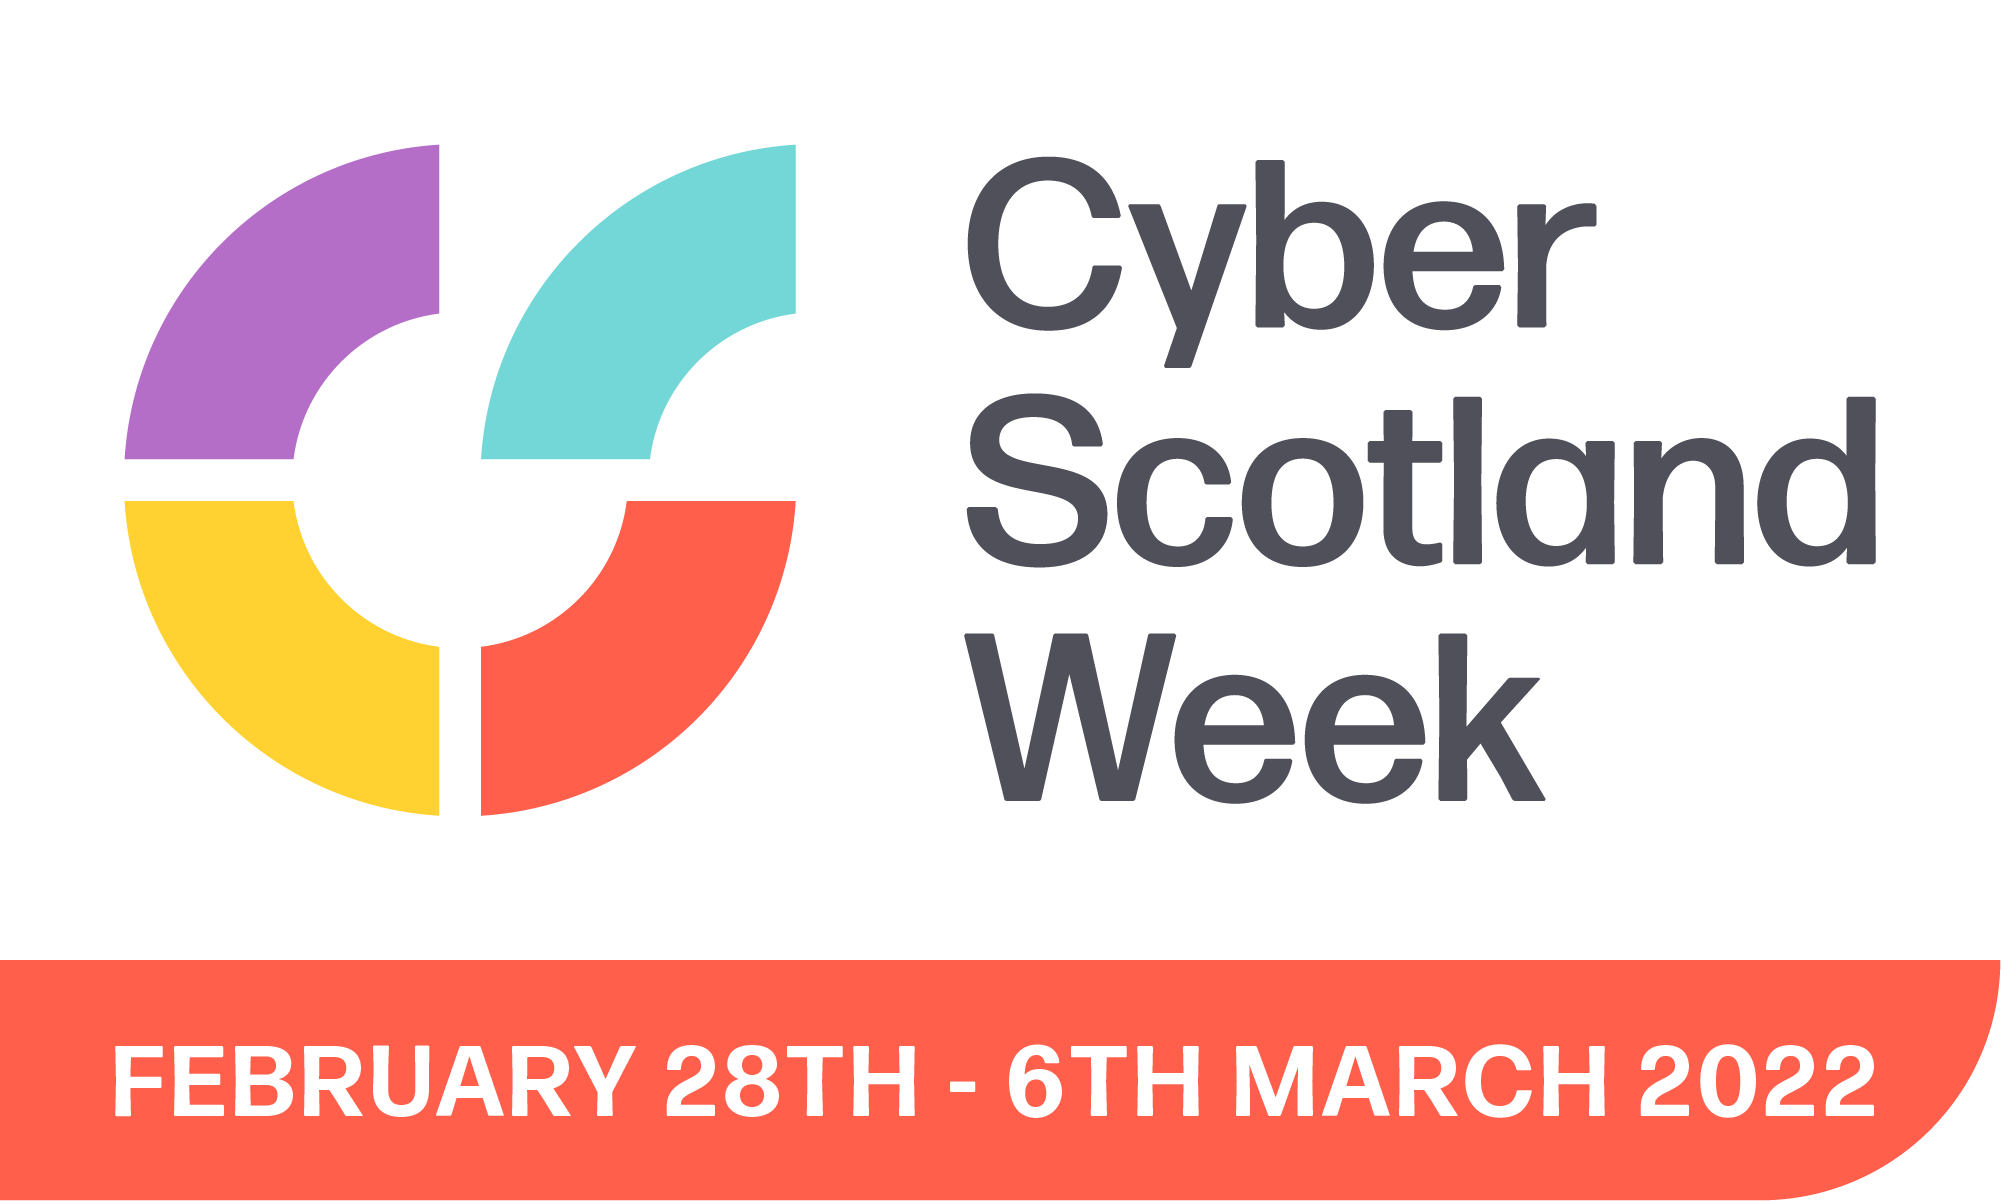 Get involved in CyberScotland Week 2022